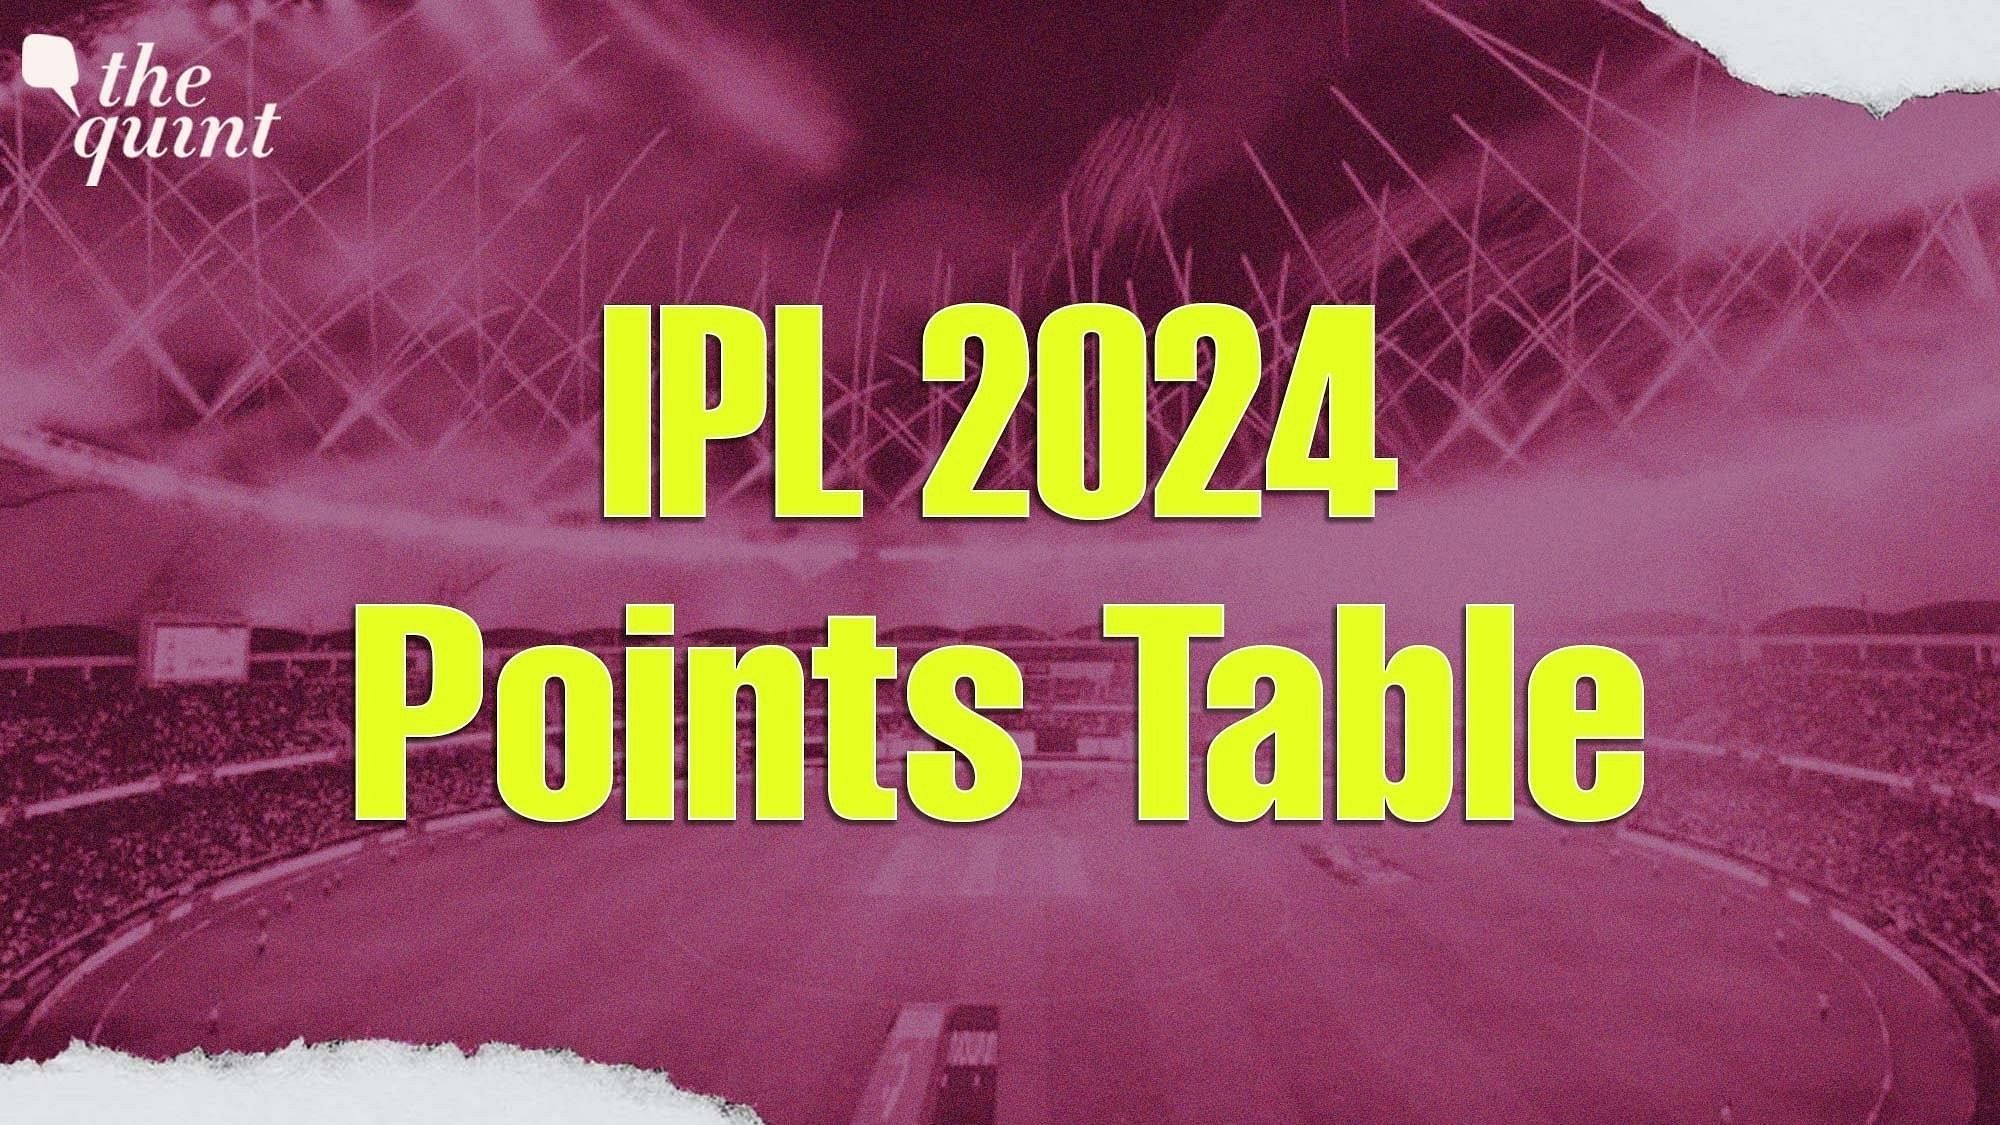 Thequint 2024 03 F920a059 Ec3f 4b57 B0e8 125234ccf2bd IPL 2024 Points Table 